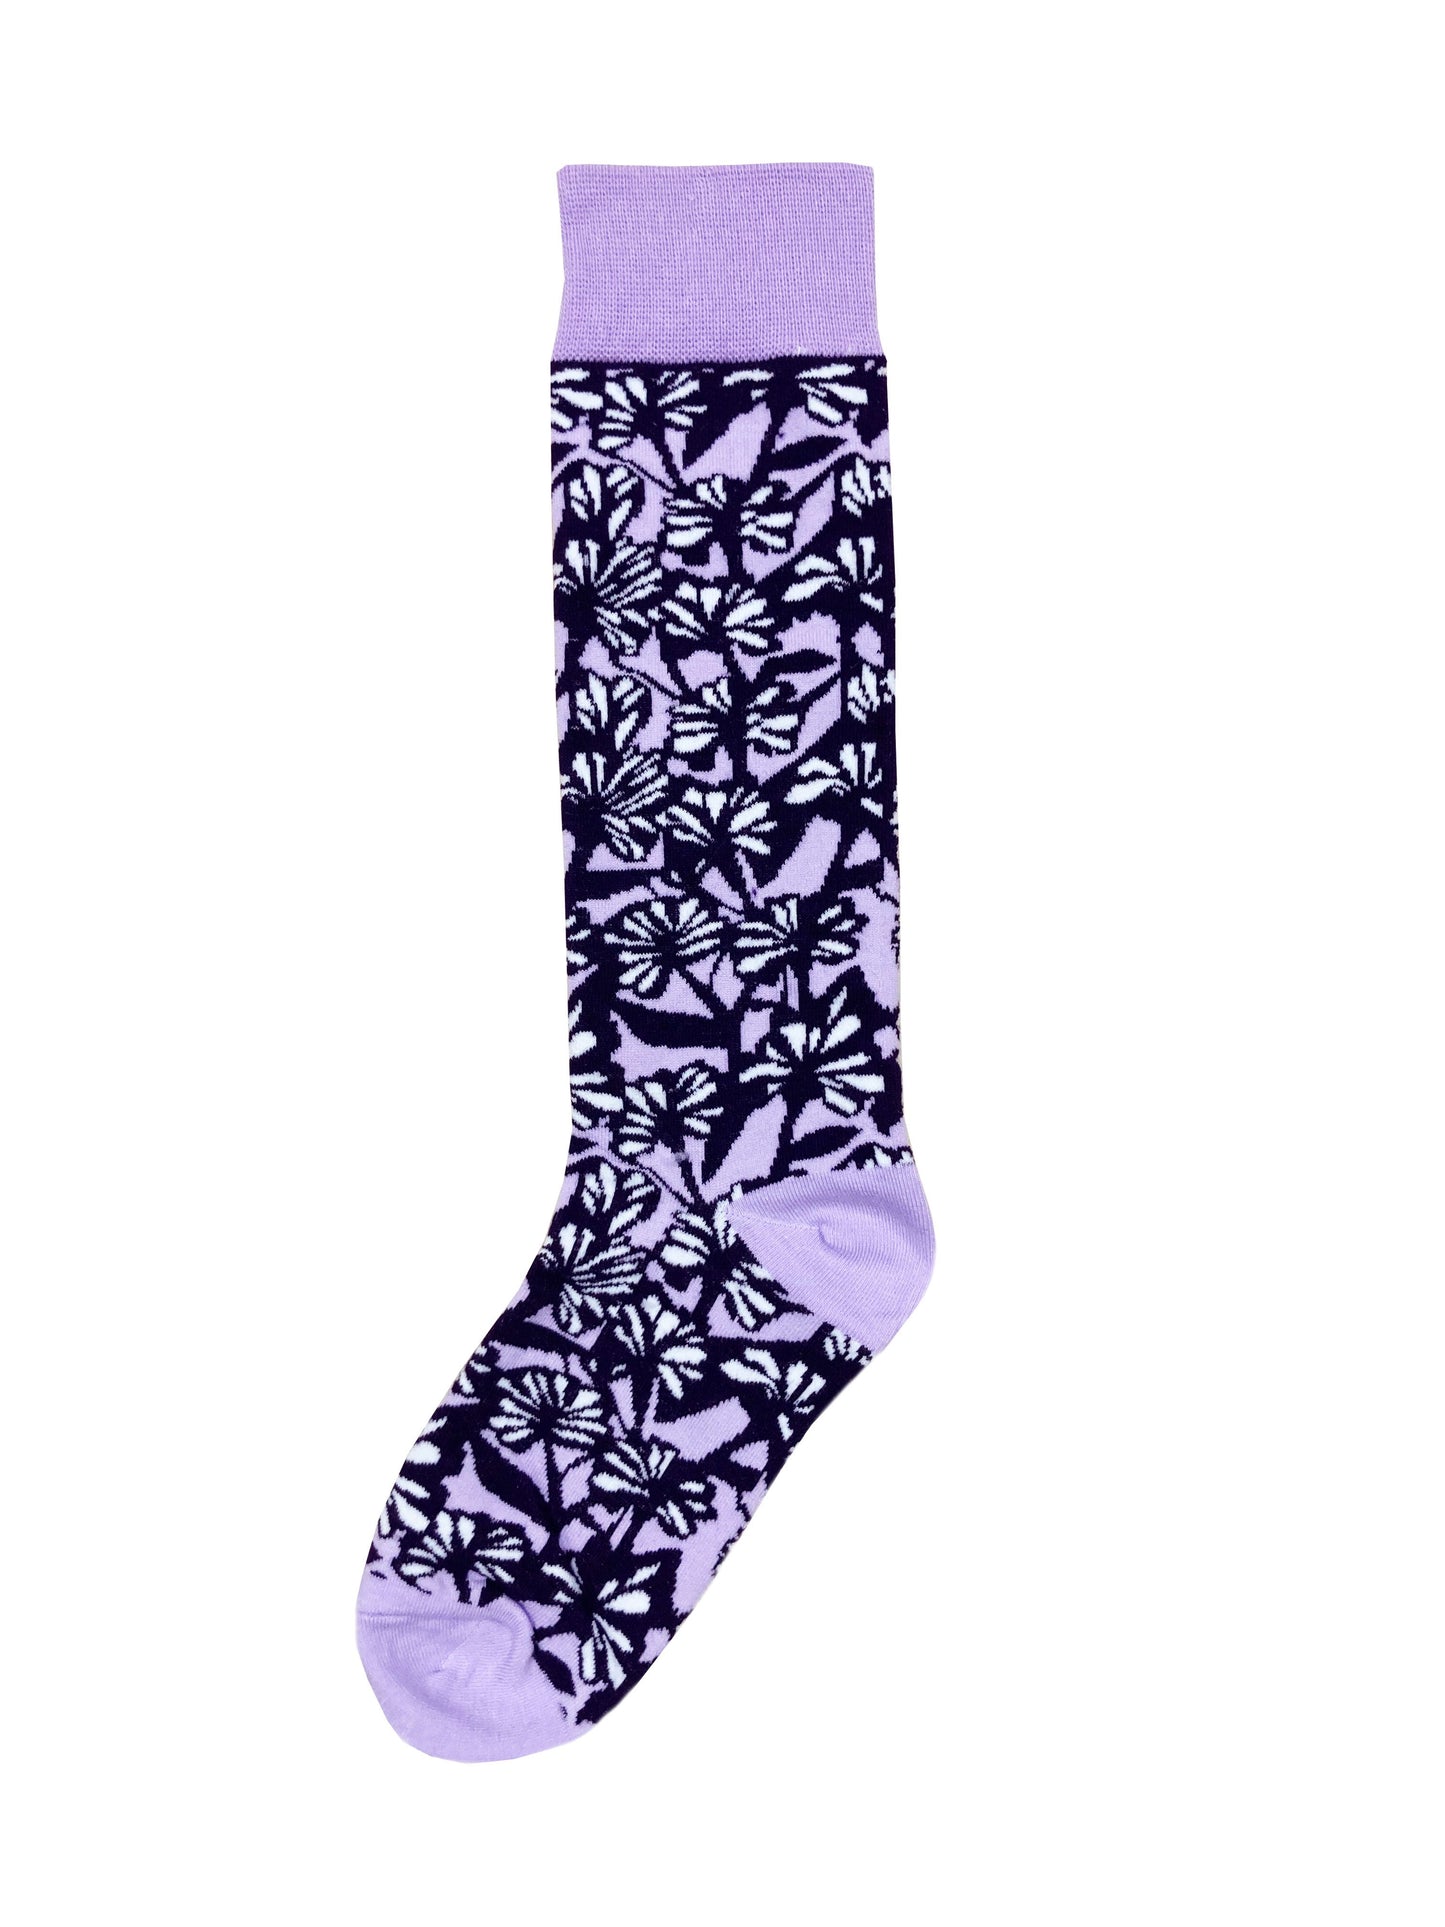 The Flower Pearl Socks in Purple